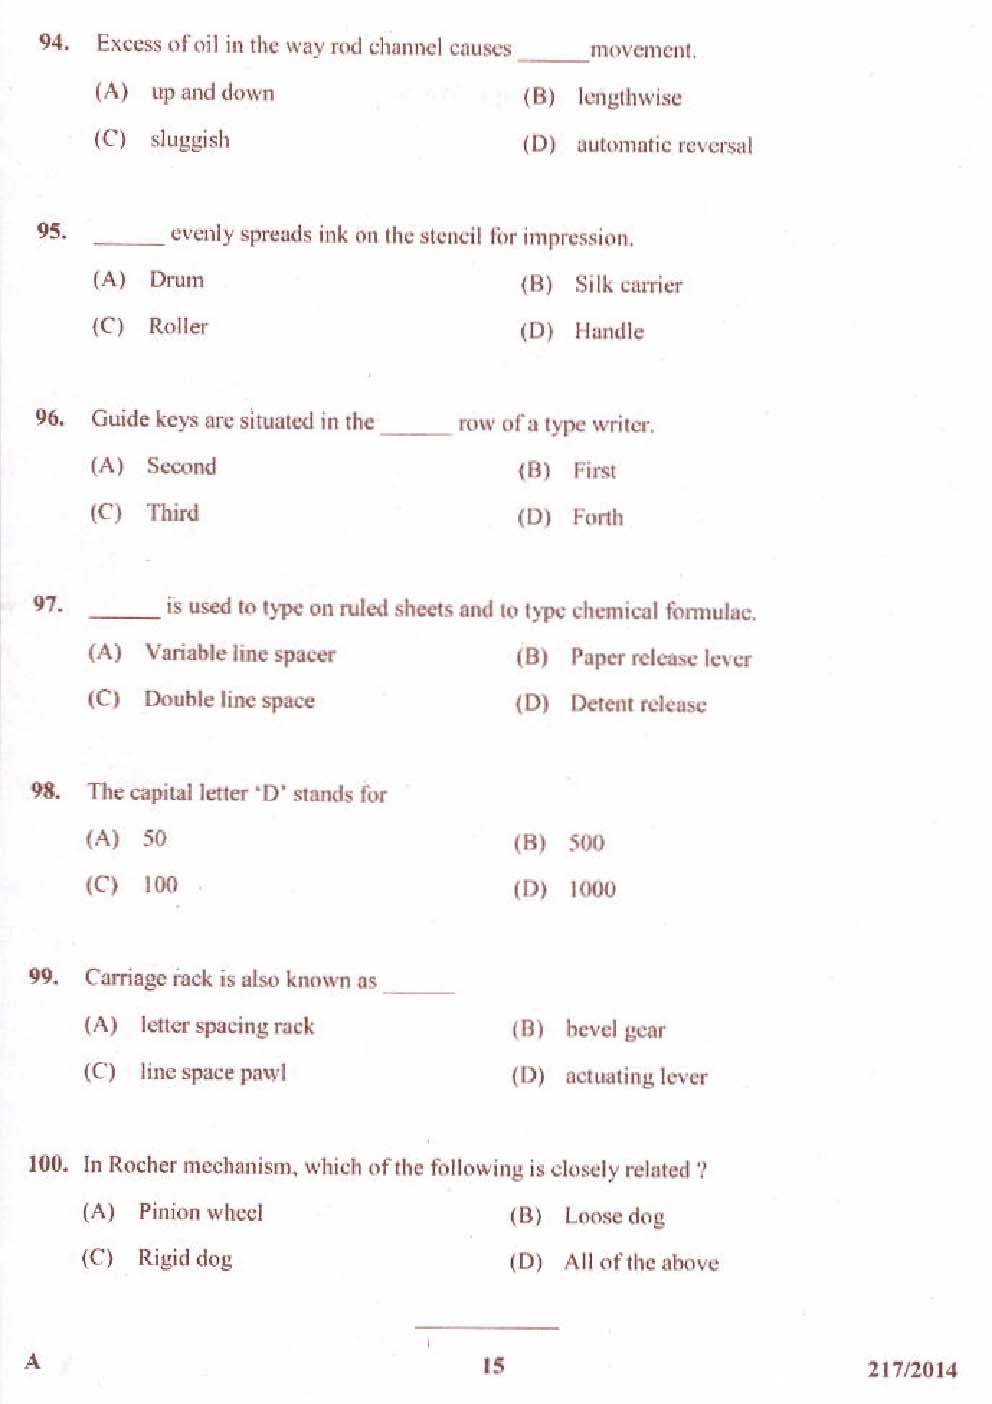 Kerala PSC Stenographer Exam 2014 Question Paper Code 2172014 15